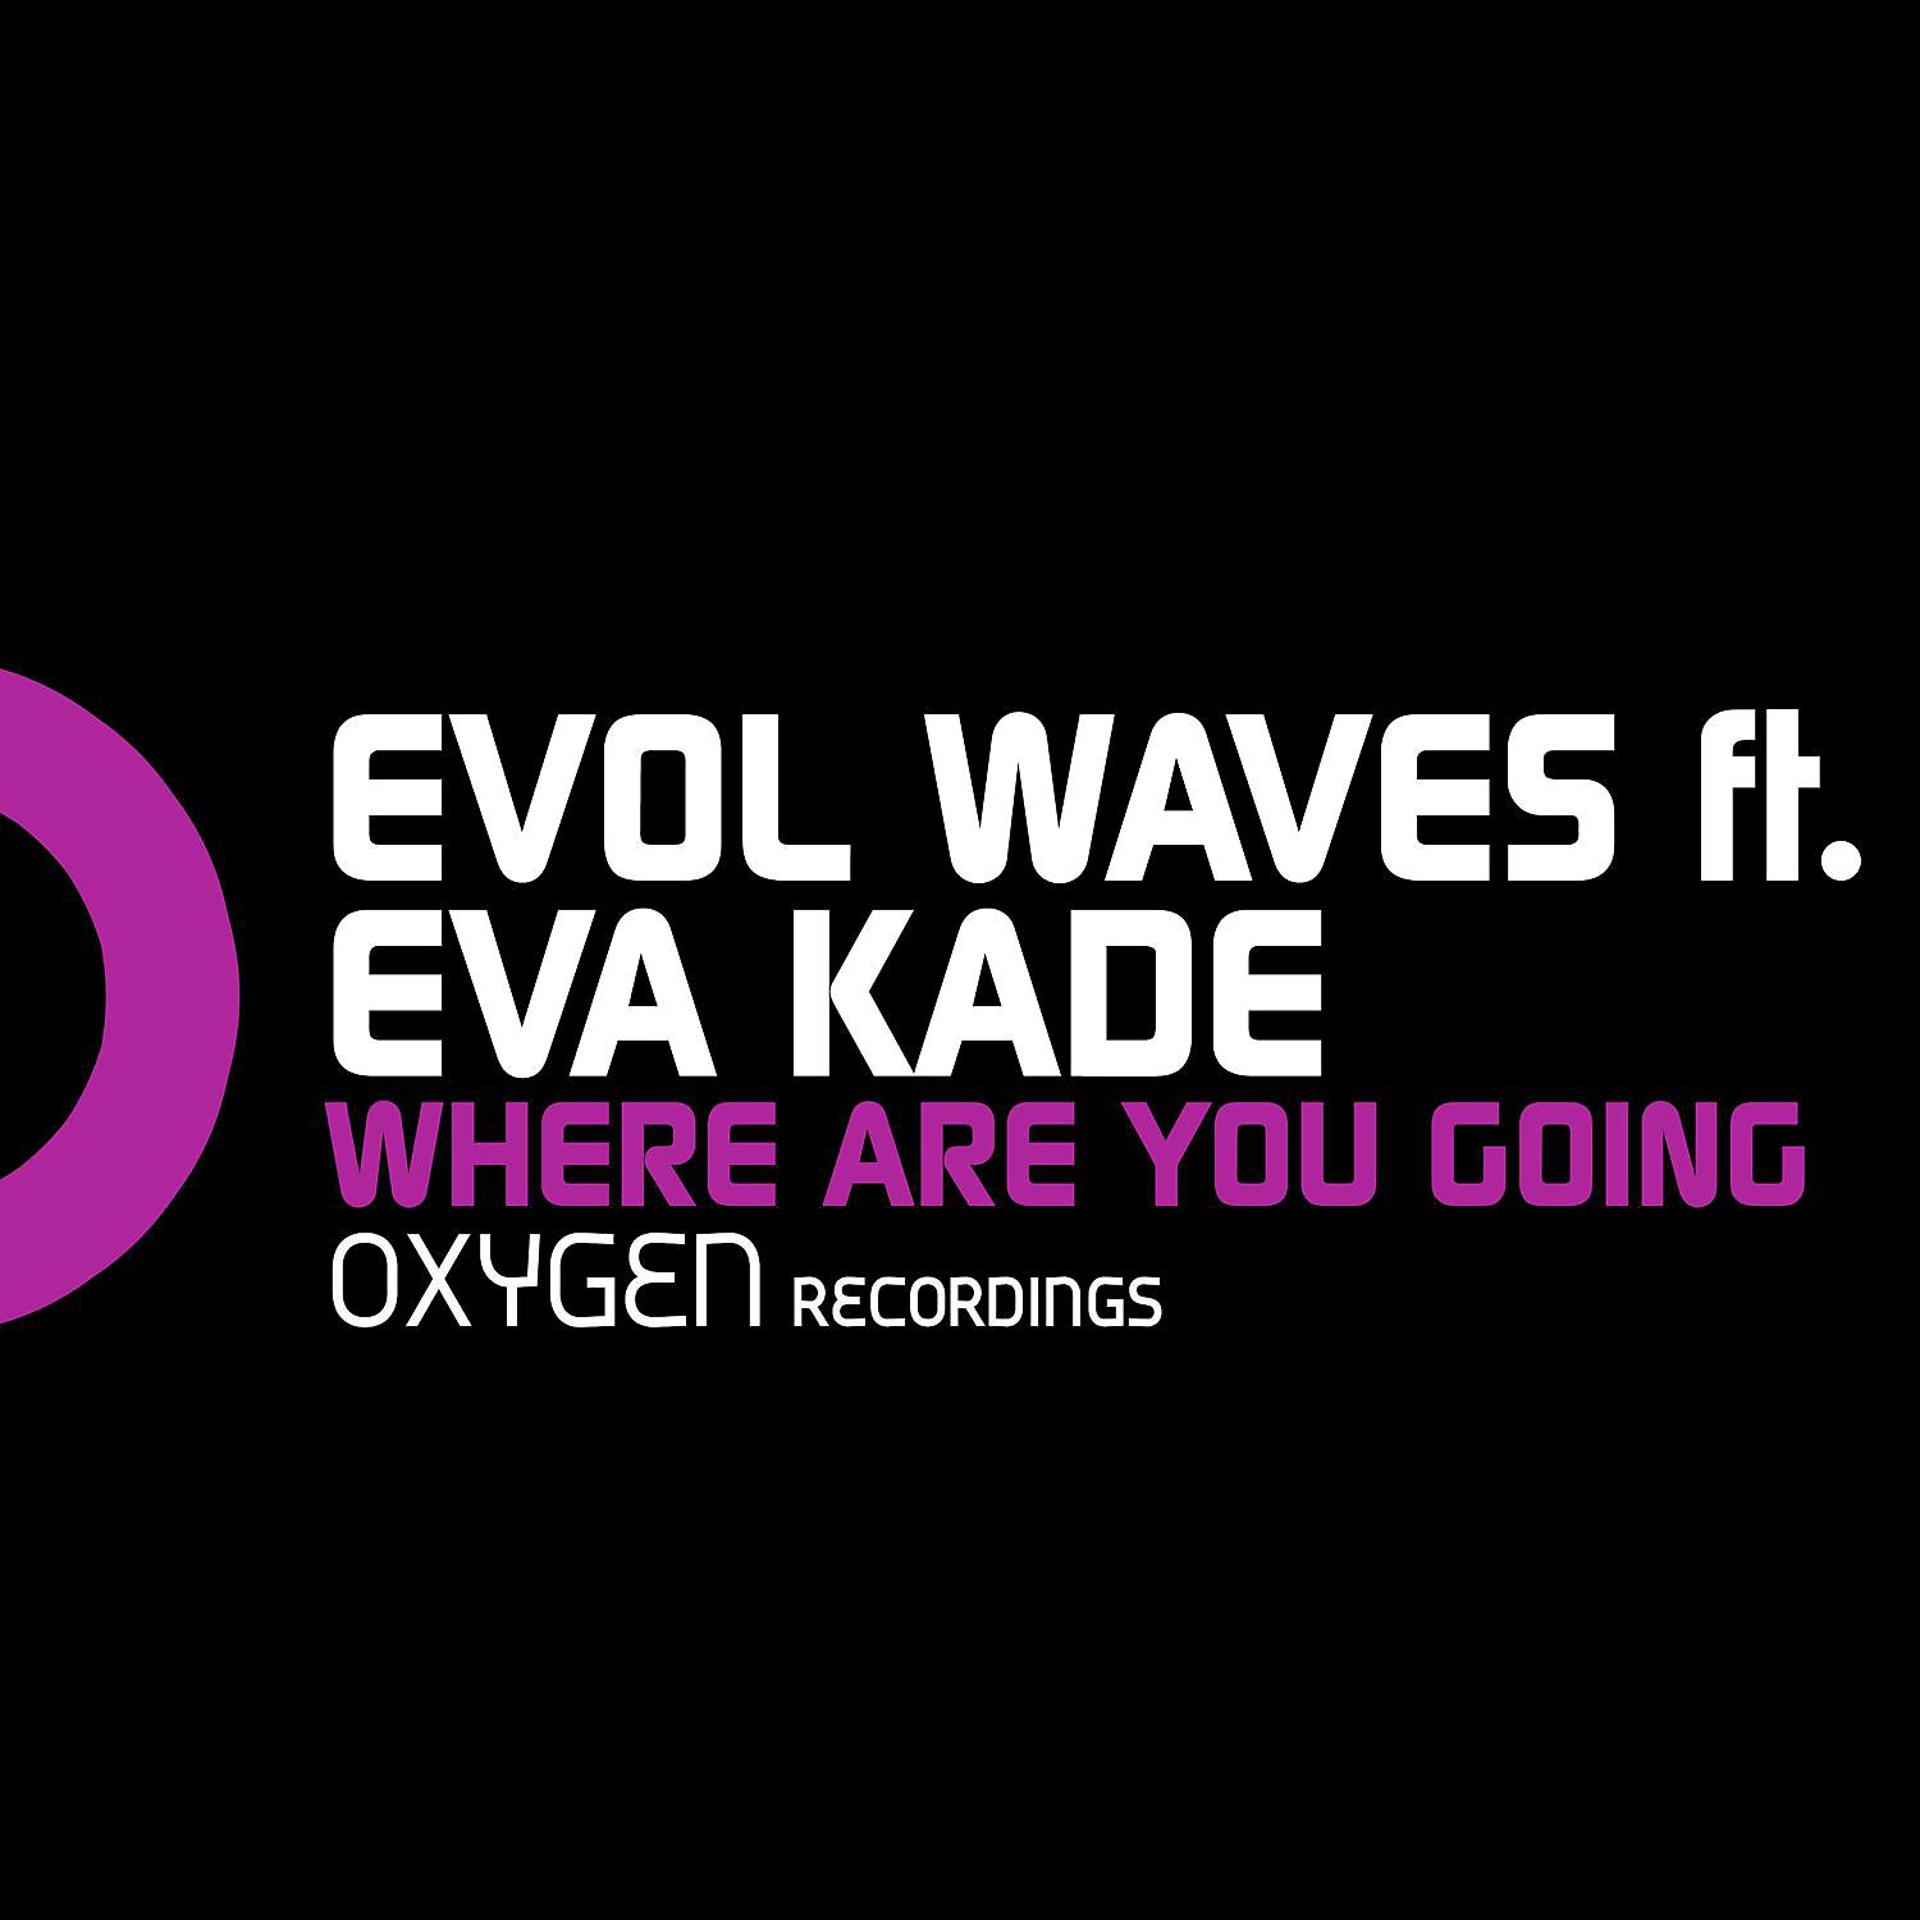 Waves feat. Eva Kade. Oxygen recordings. Colonial one feat Eva Kade where you are. Sunlight (feat. Eva Kade) Mike kukin cлушать.